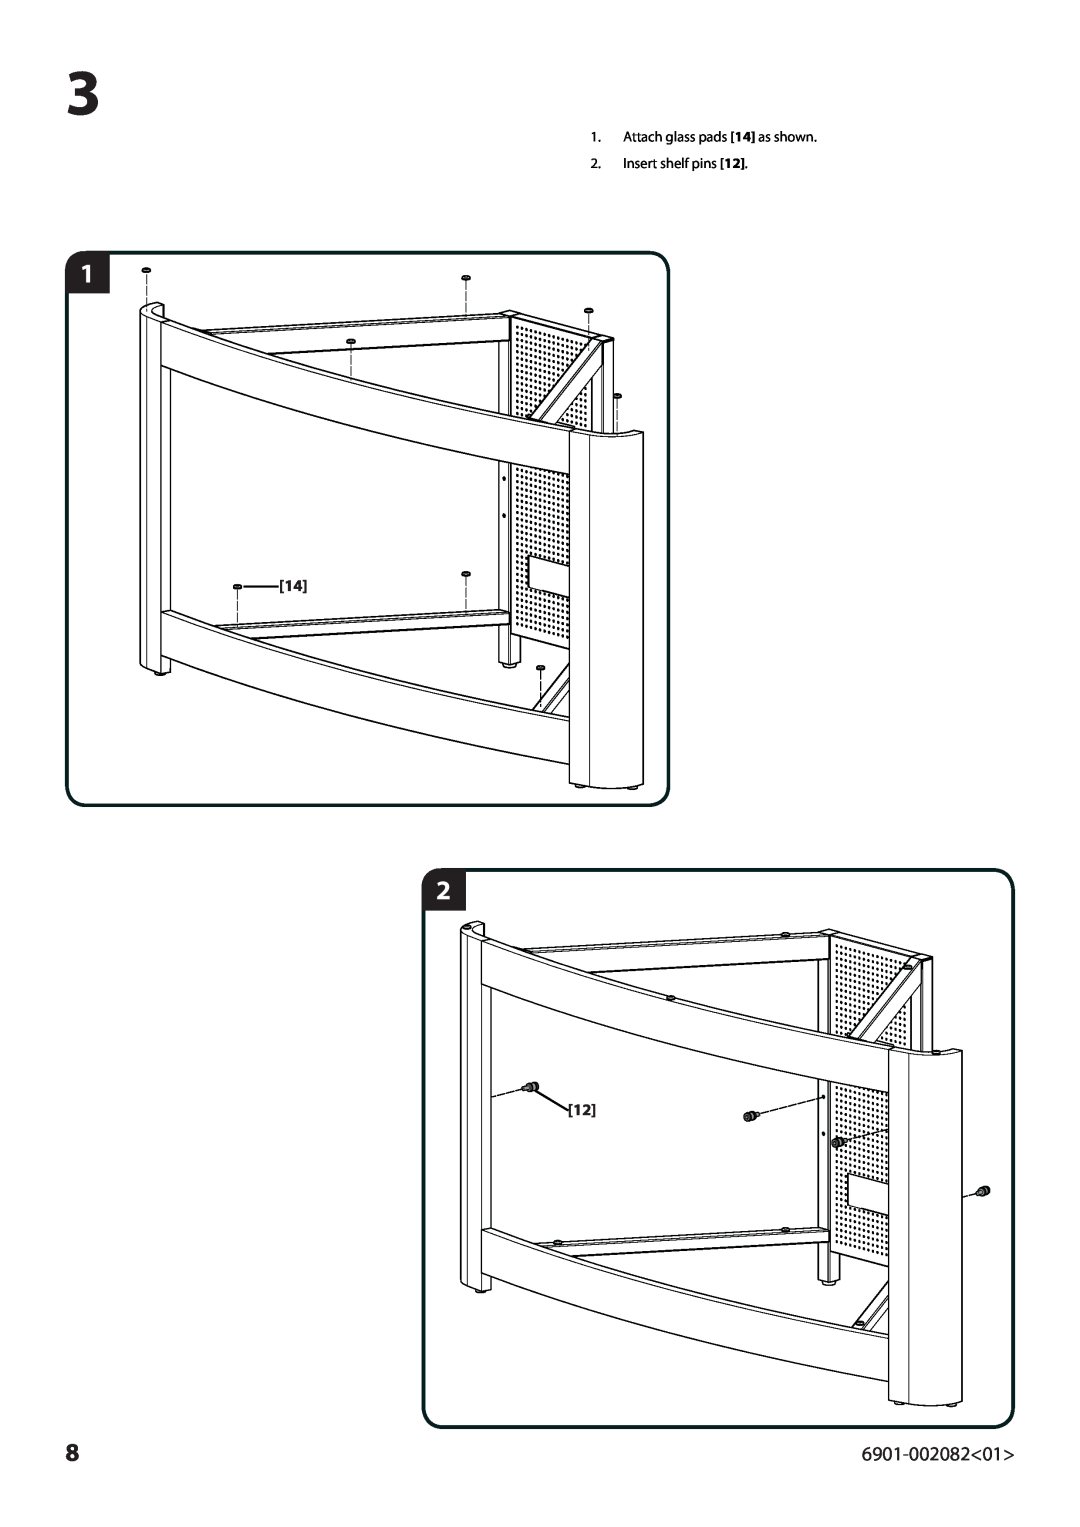 Sanus Systems BFAV344 manual Attach glass pads 14 as shown 2. Insert shelf pins 